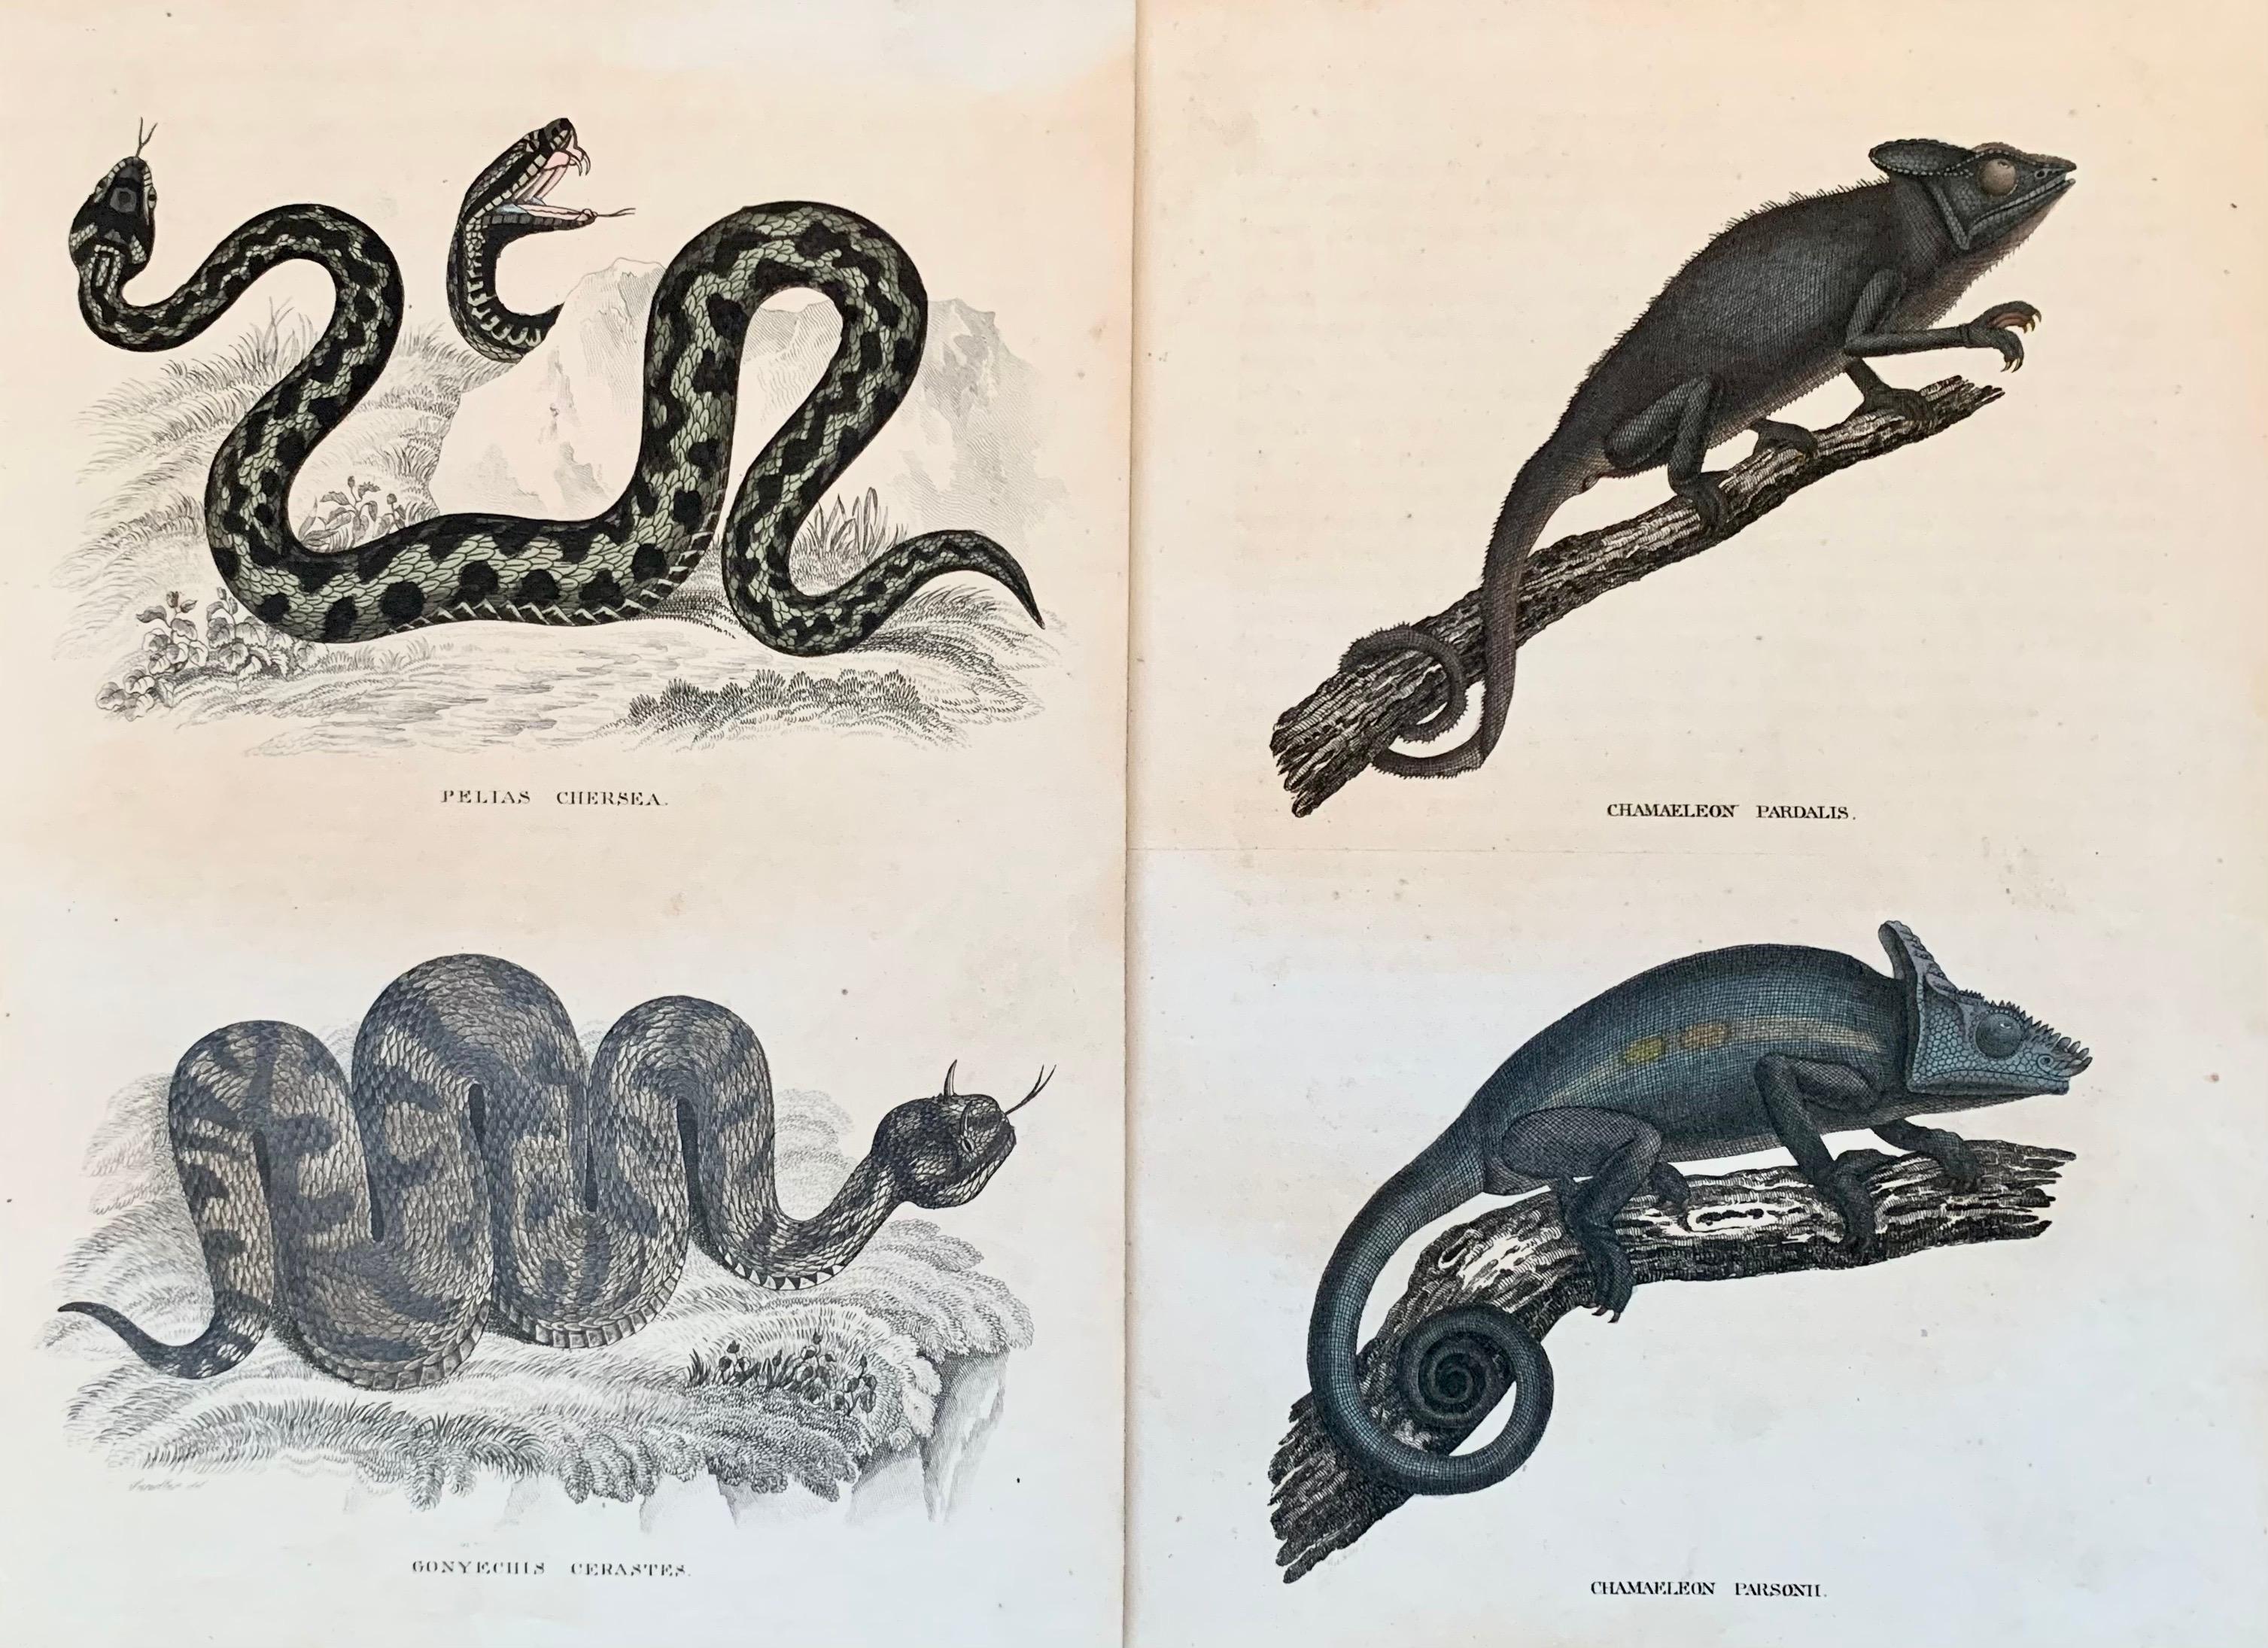 Sir William Jardine, 7th Baronet (after) Landscape Print - Snake and Chameleon Hand Coloured Print - exotic snakes 